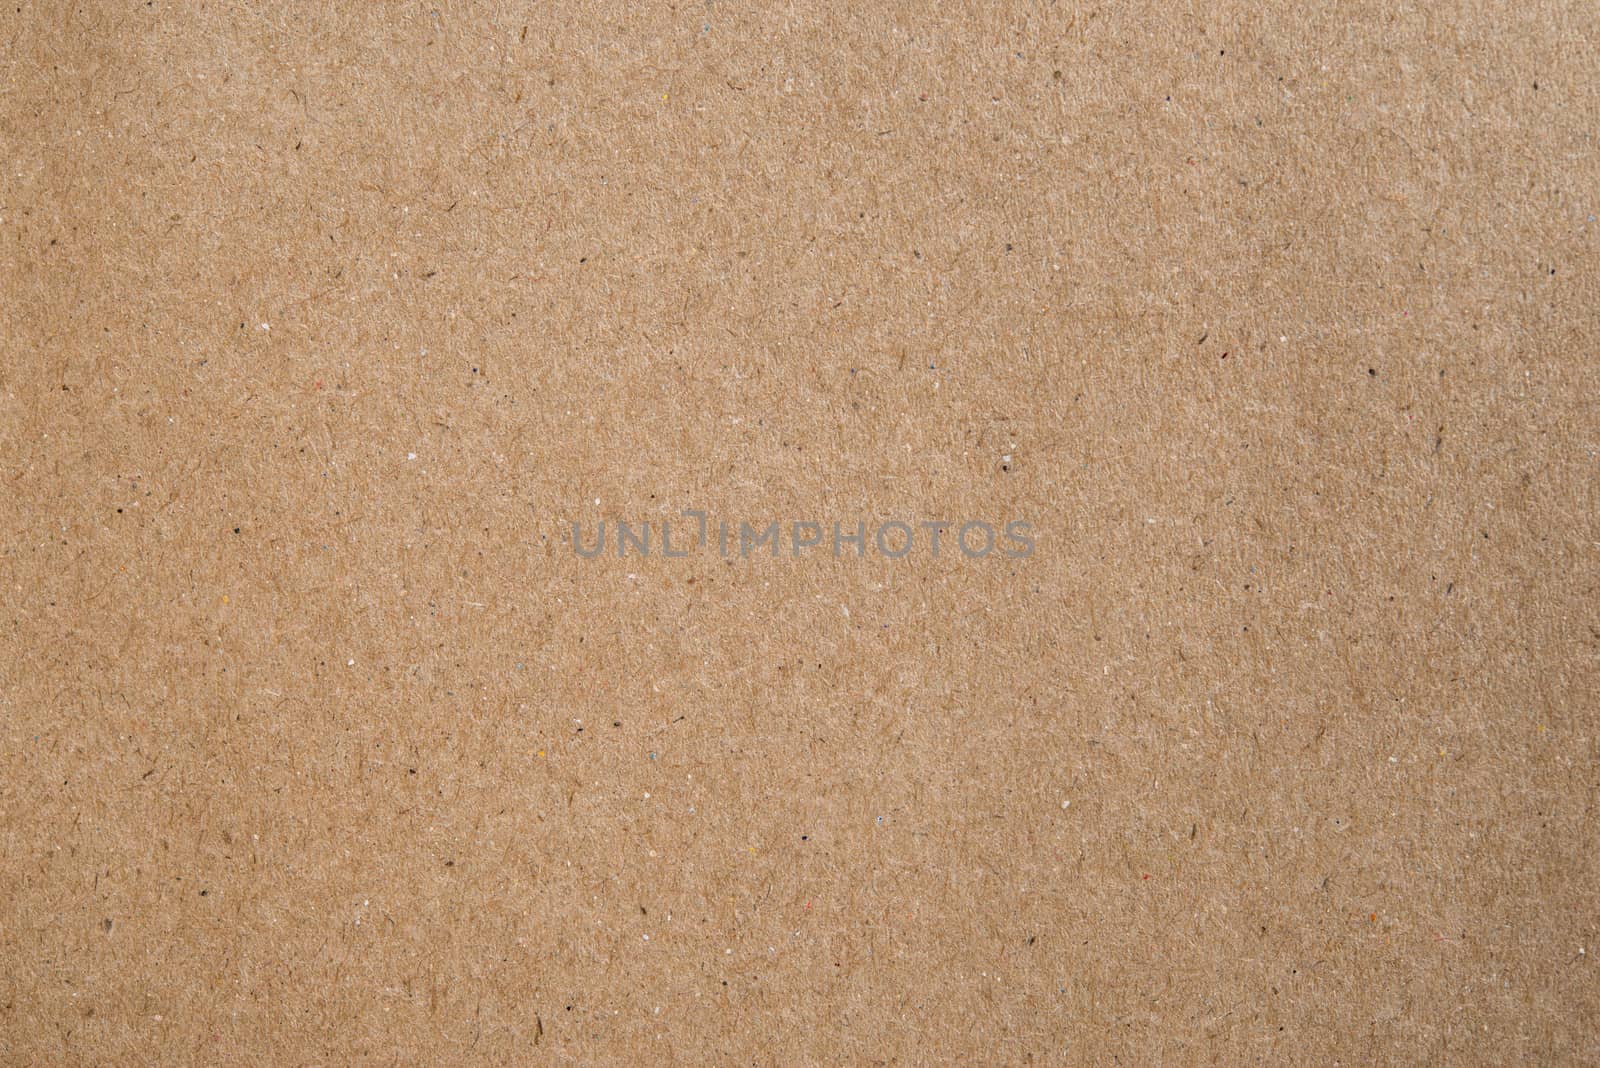 brown cardboard  paper texture by antpkr